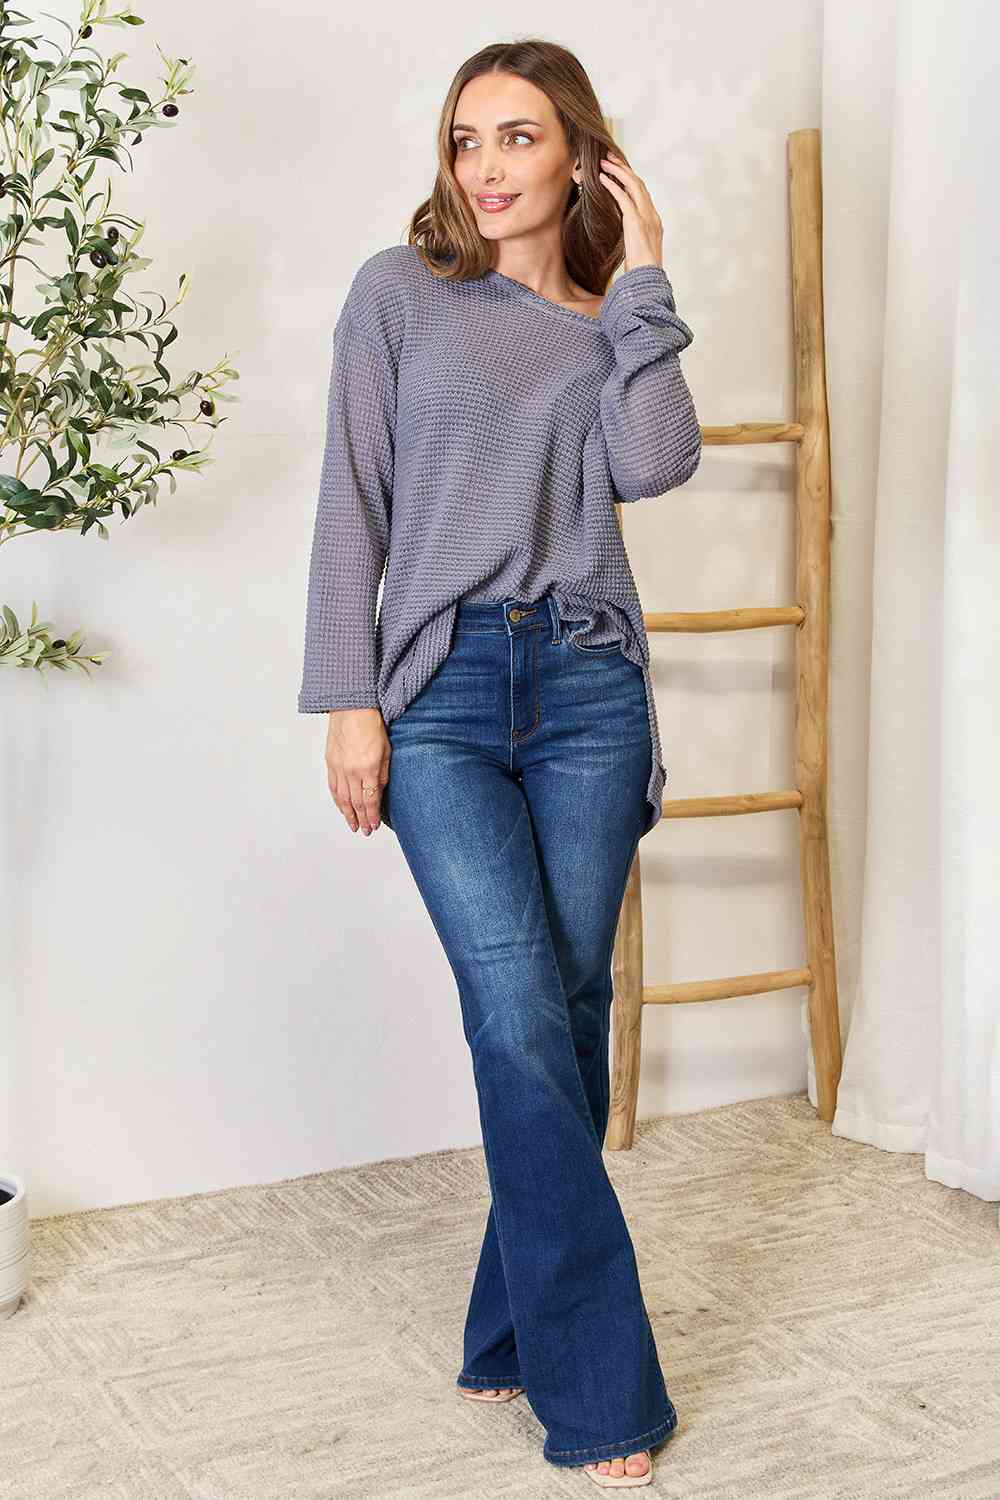 The waffle-knit round neck long sleeve slit sweatshirt is a cozy and stylish addition to any wardrobe.